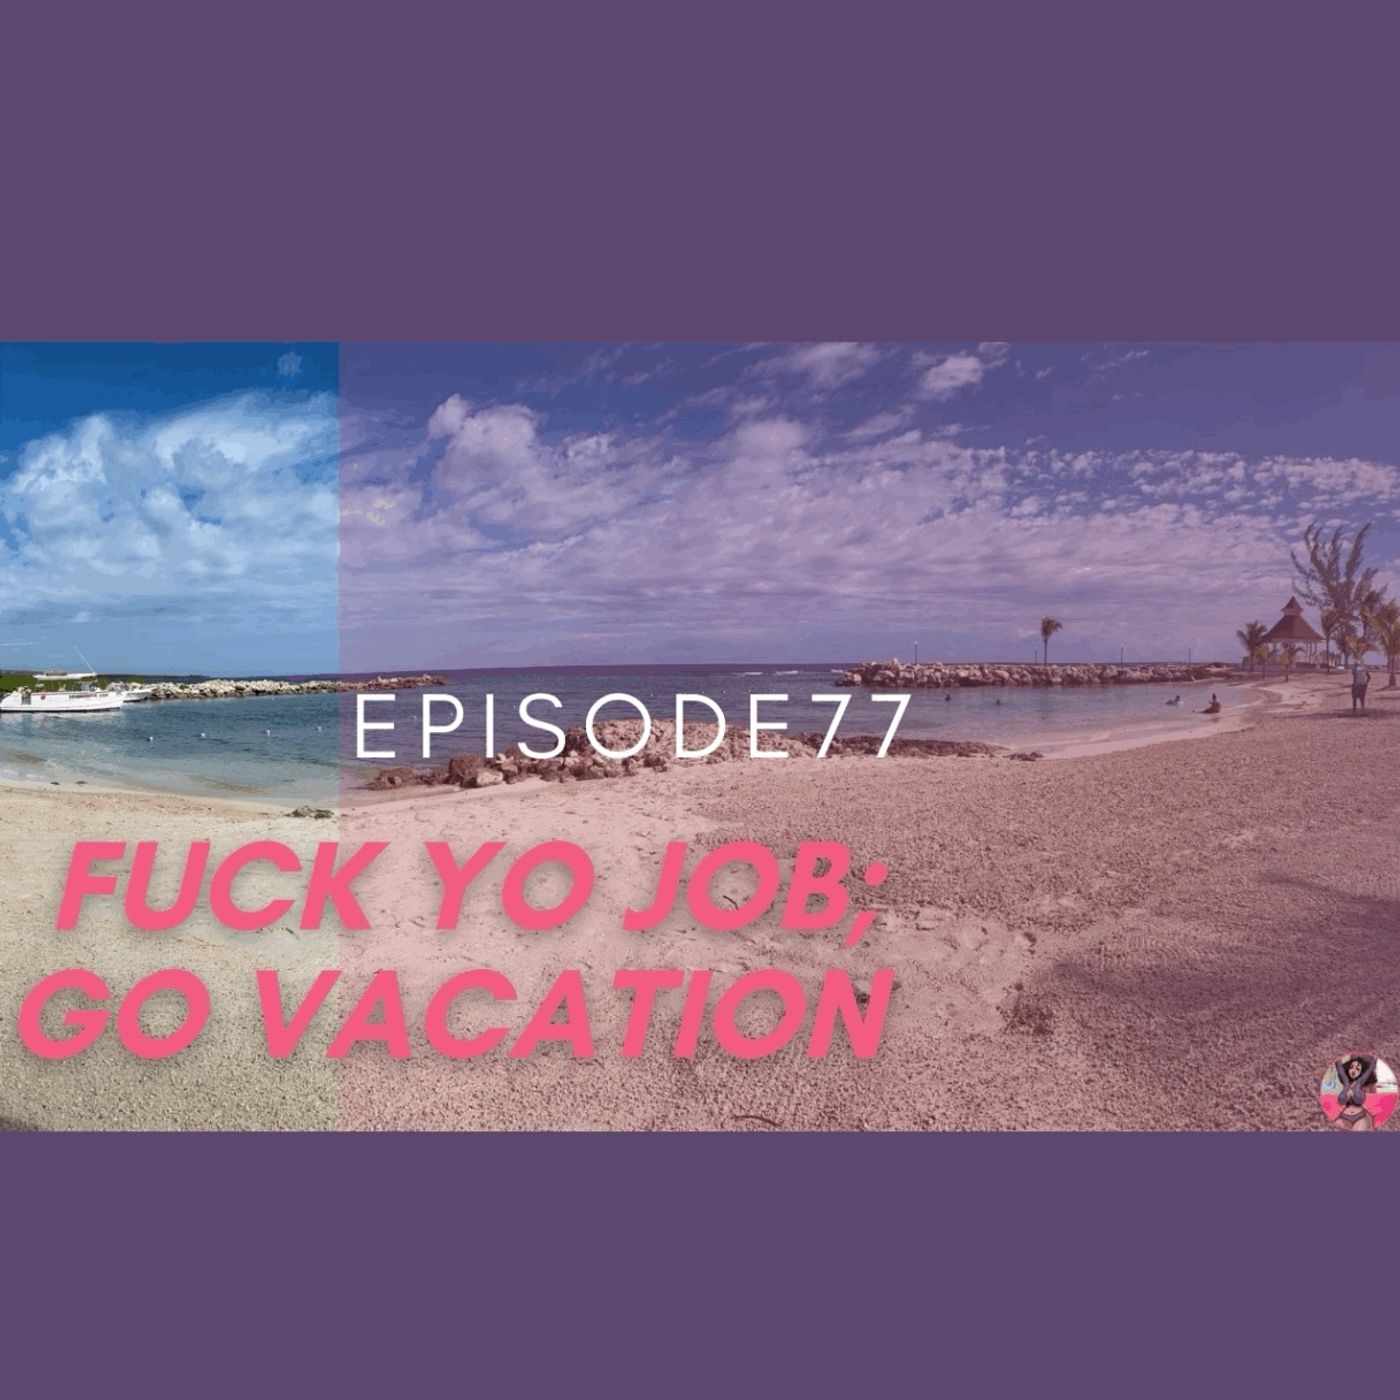 Episode 77: Fuck Yo Job; Go on Vacation